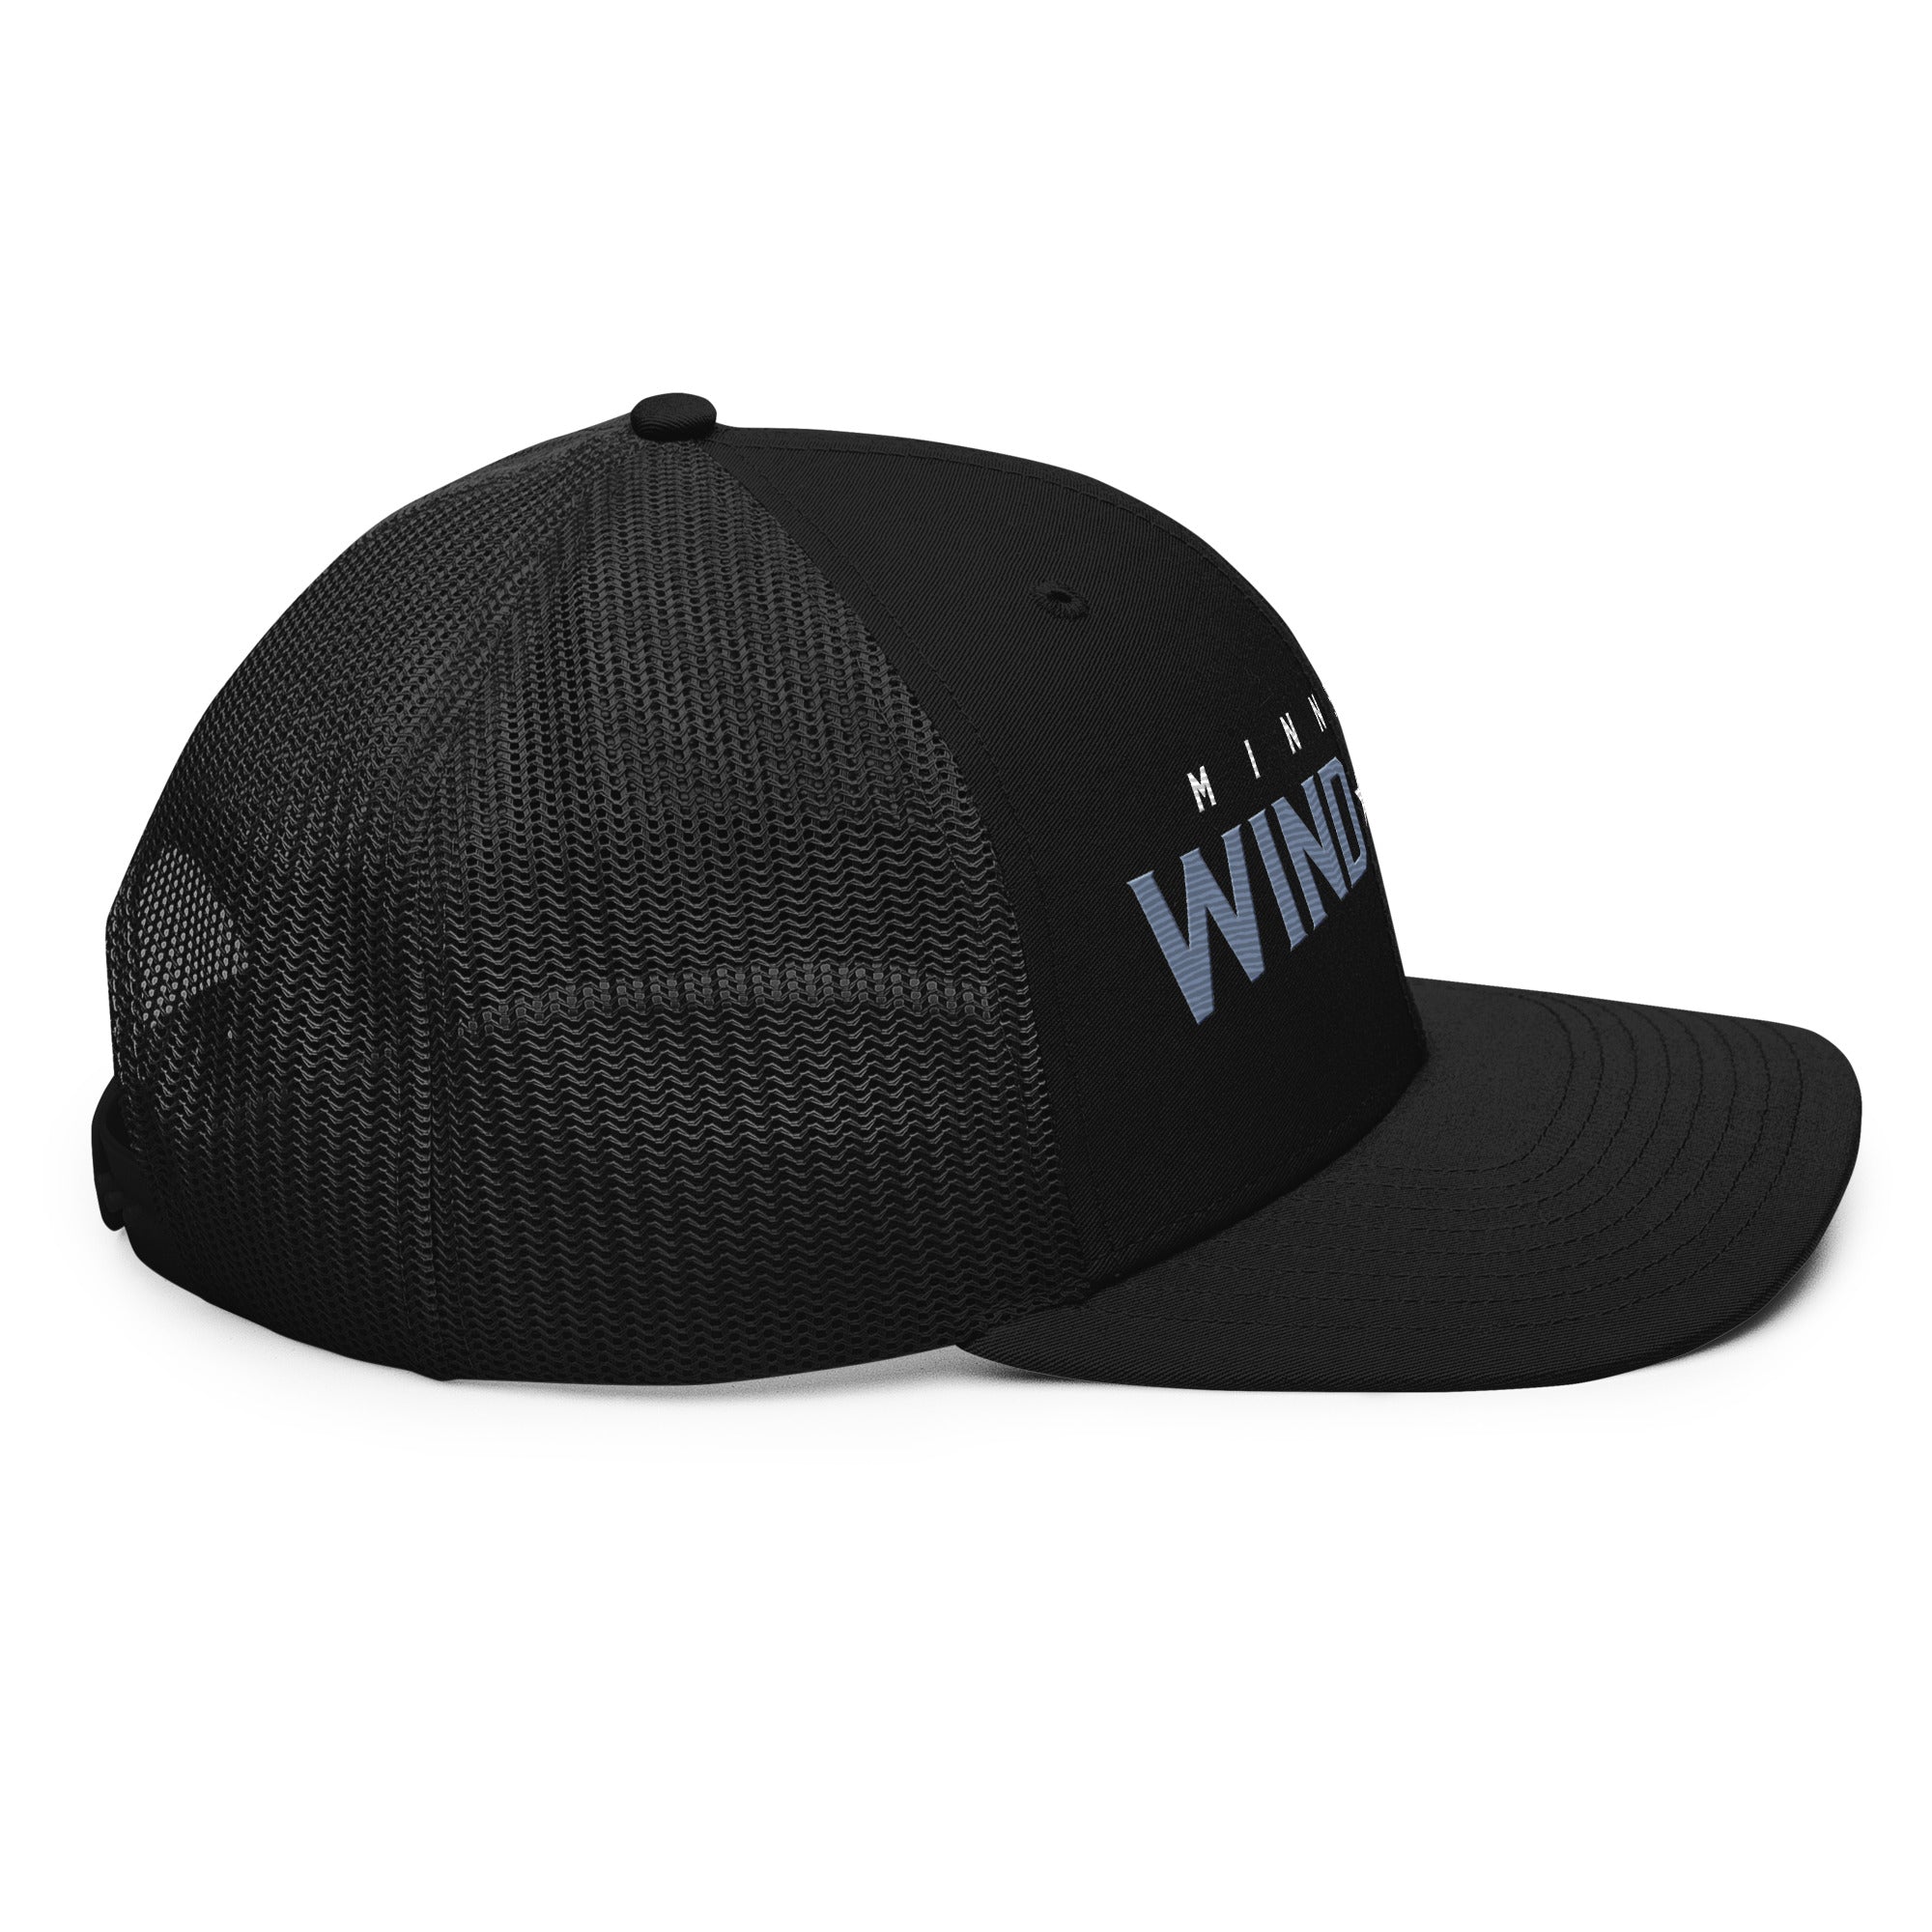 Wind Chill Wordmark Trucker Hat